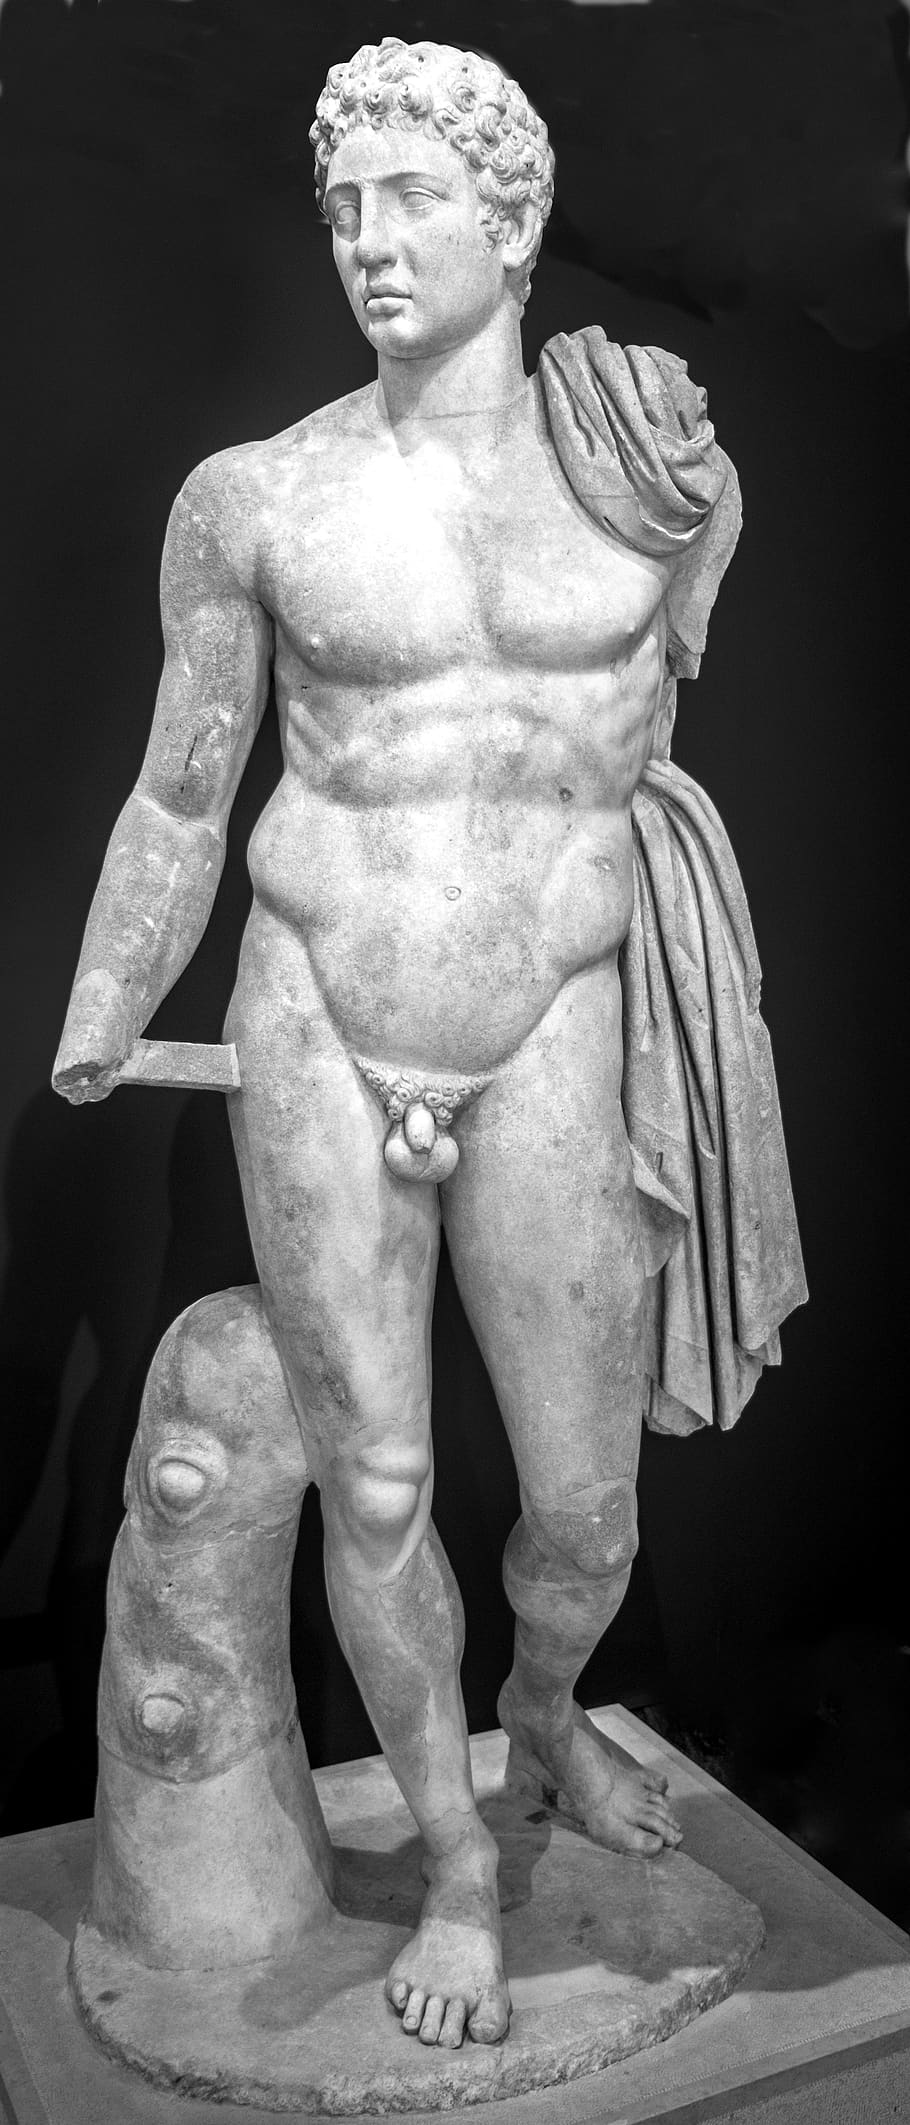 hermes, statue, sculpture, art, naked body, museum, ancient greece, human representation, art and craft, representation